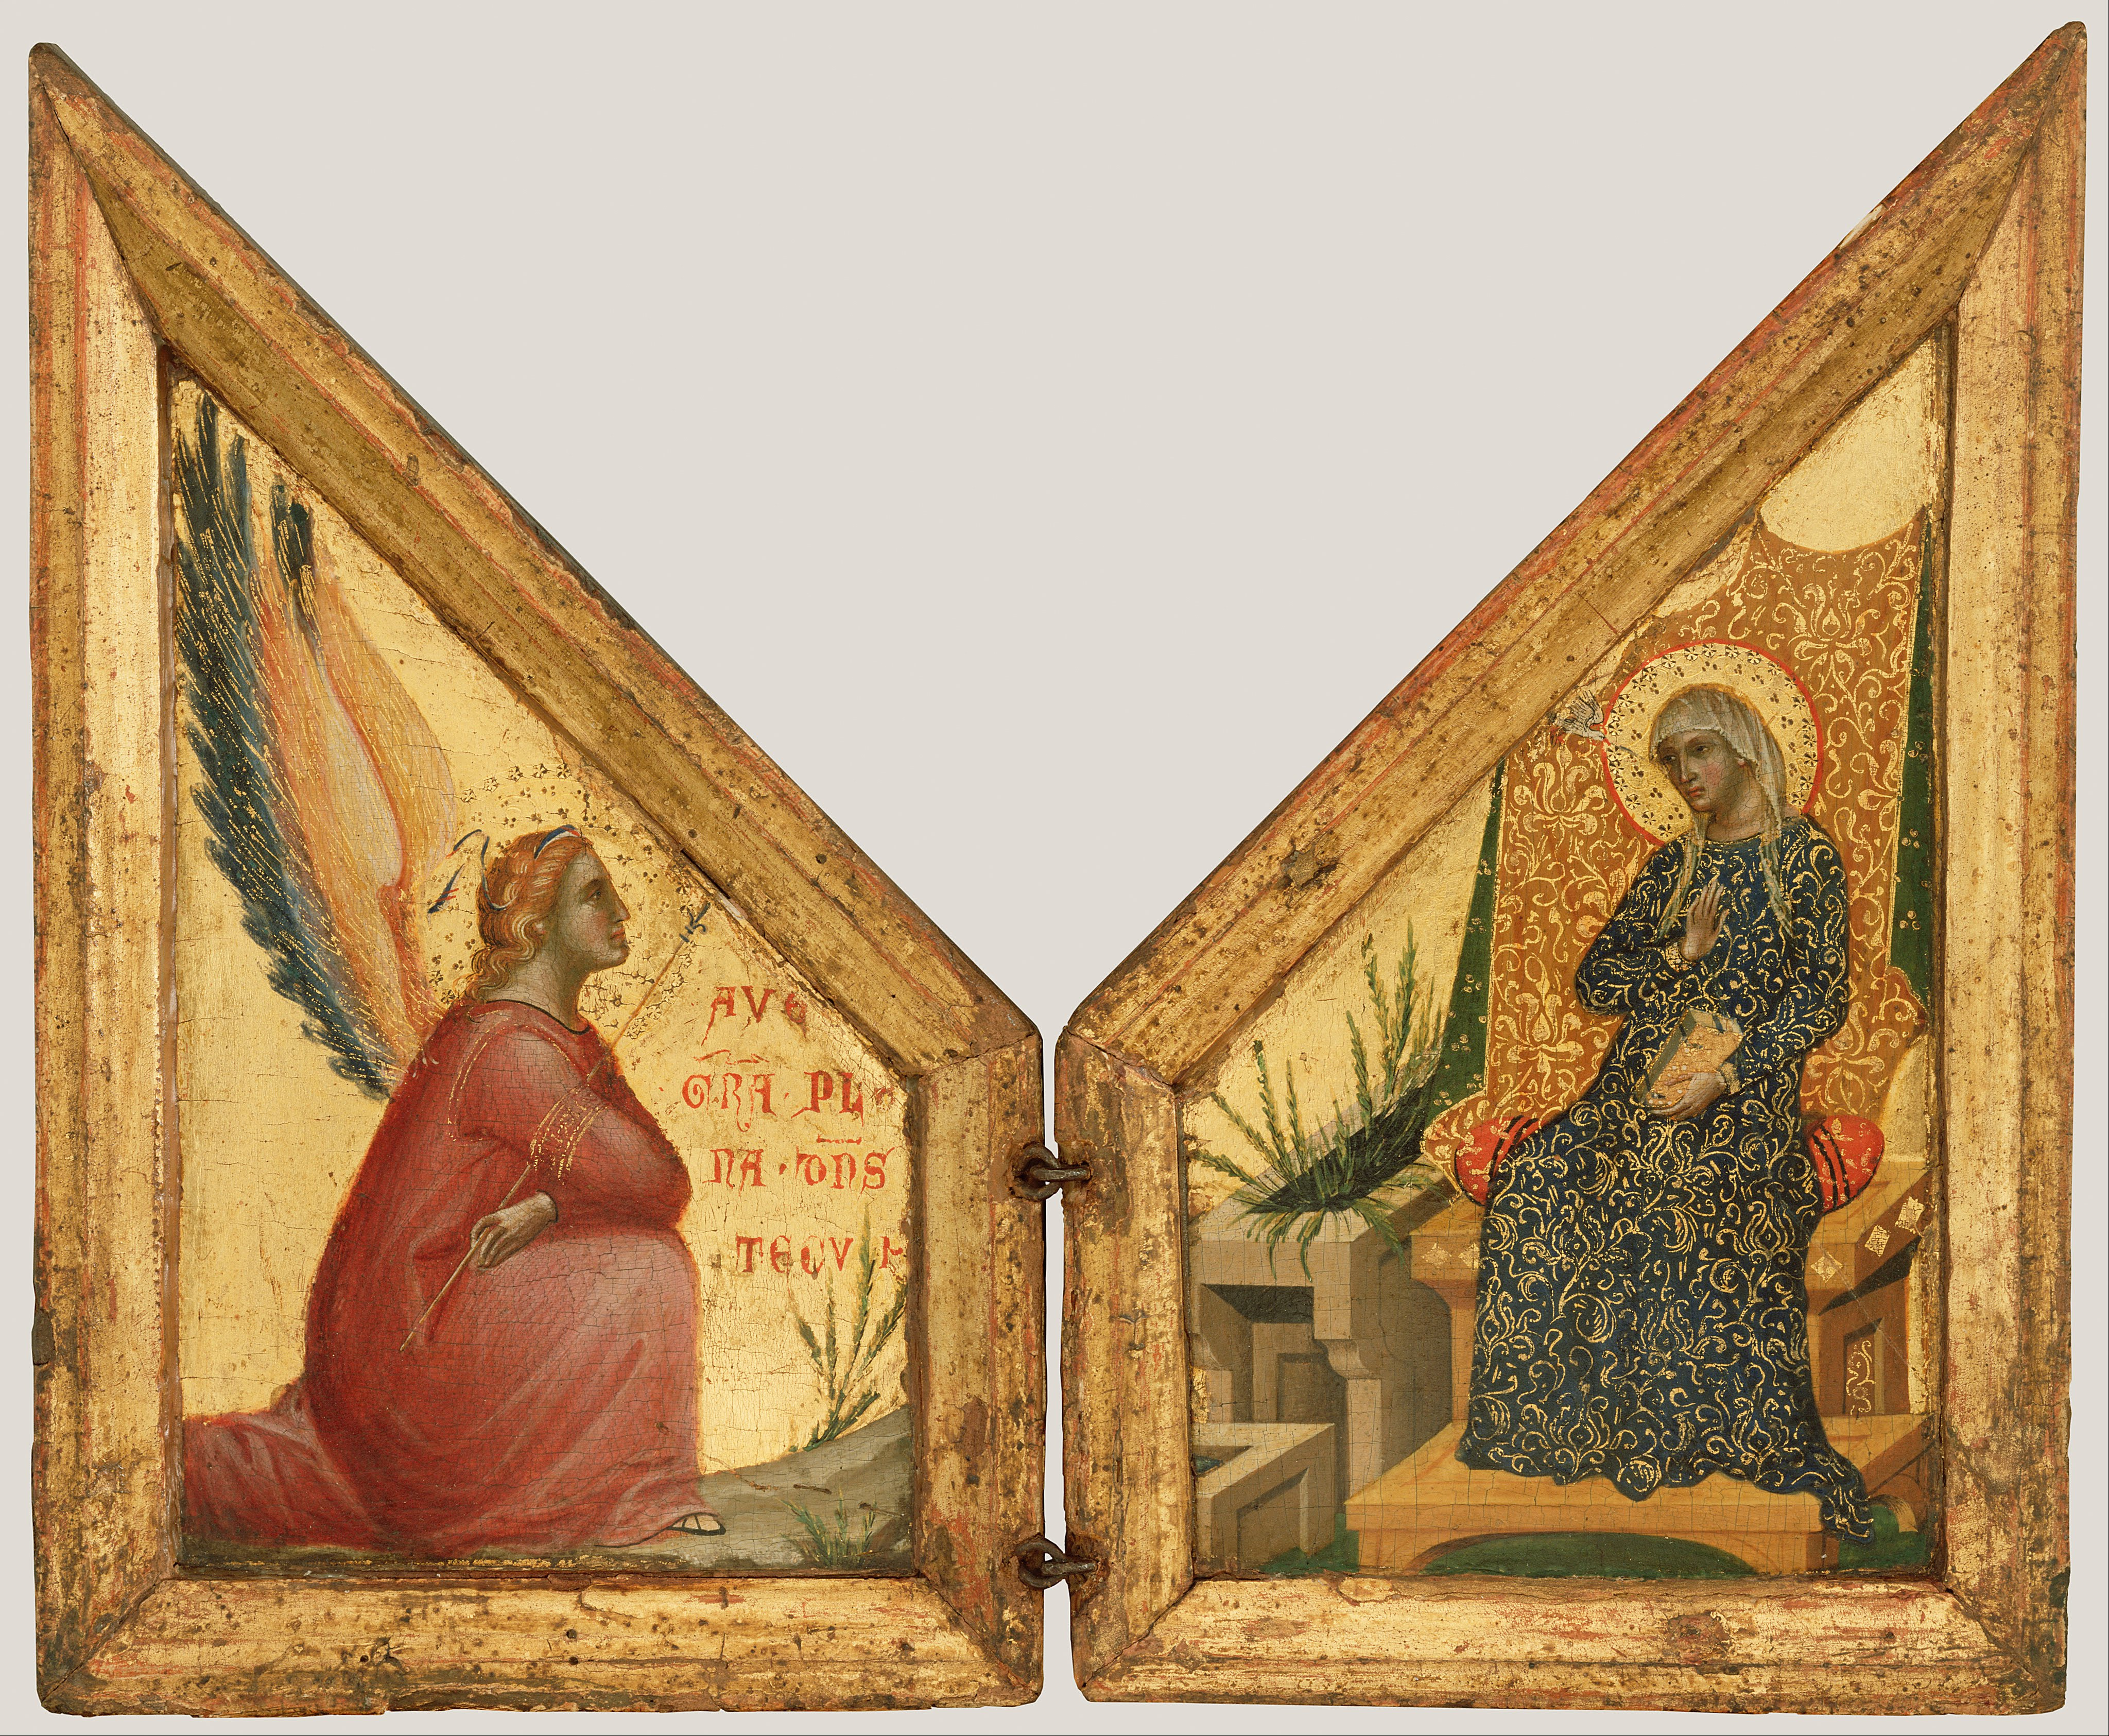 Paolo Veneziano (Italian (Venetian), active 1333 - 1358) - The Annunciation - Google Art Project